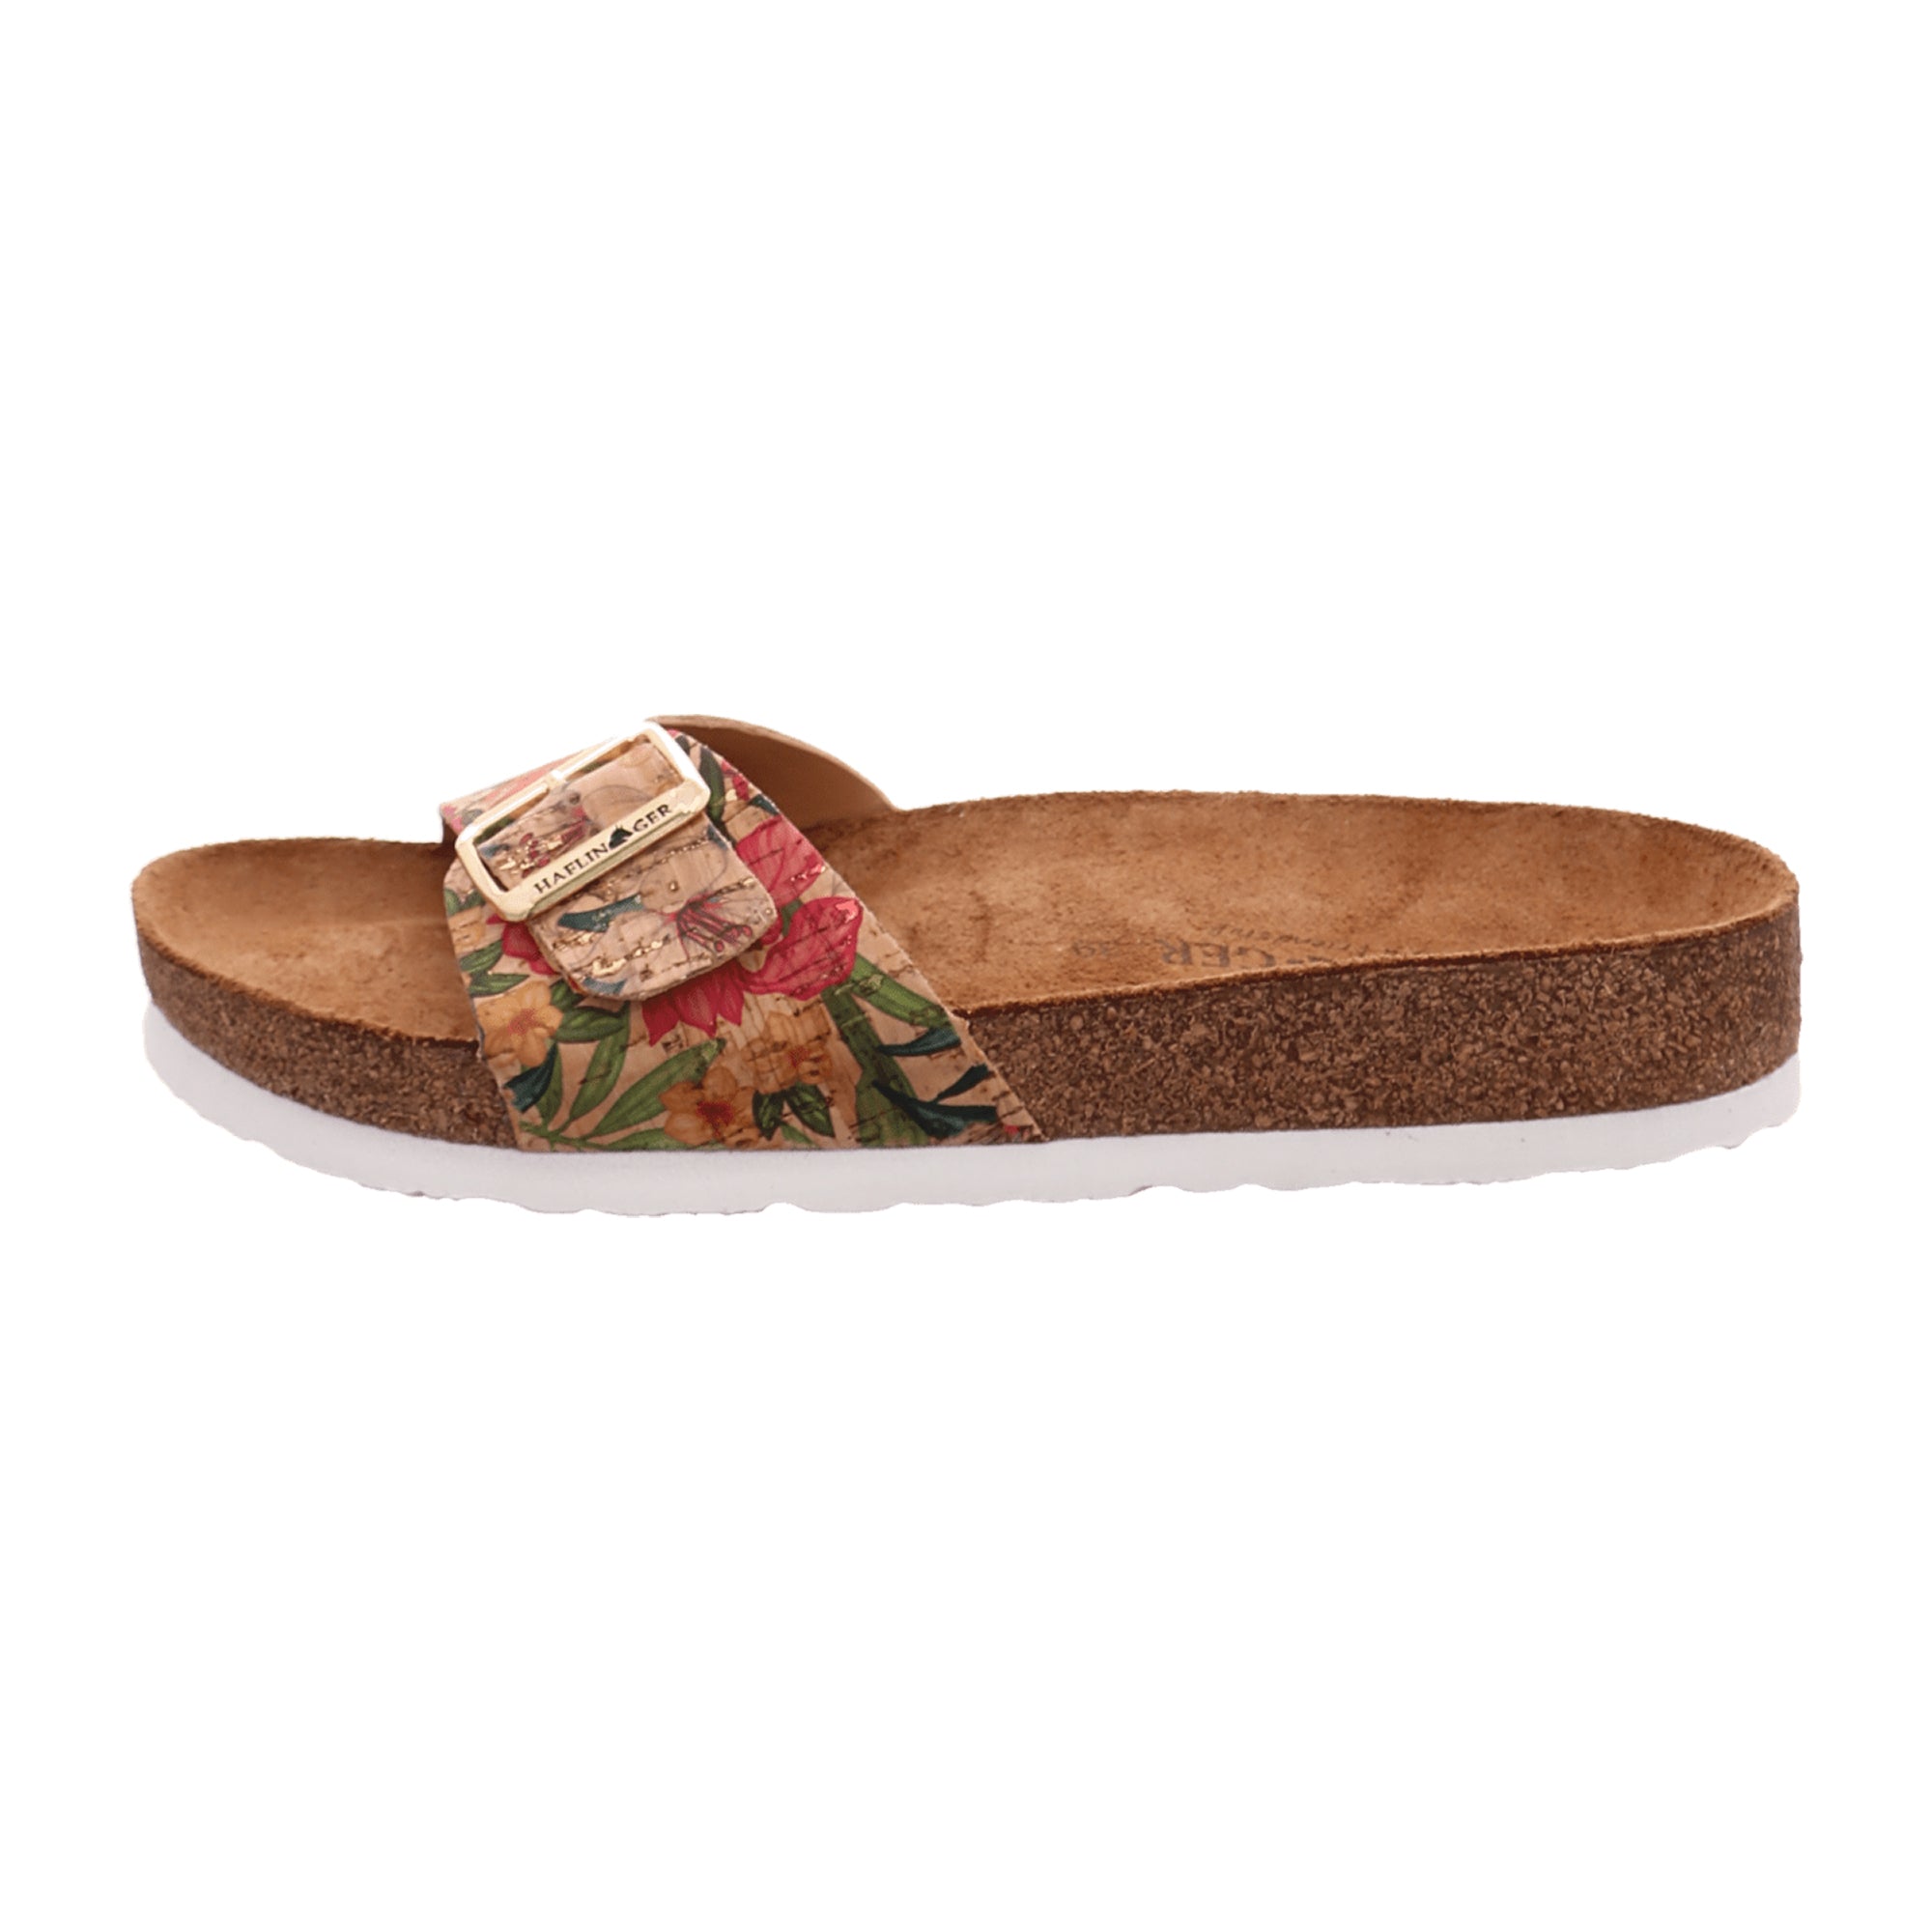 Haflinger Bio Gina Women's Sandals - Hibiscus Cork Multi, Size EU 37, Colorful